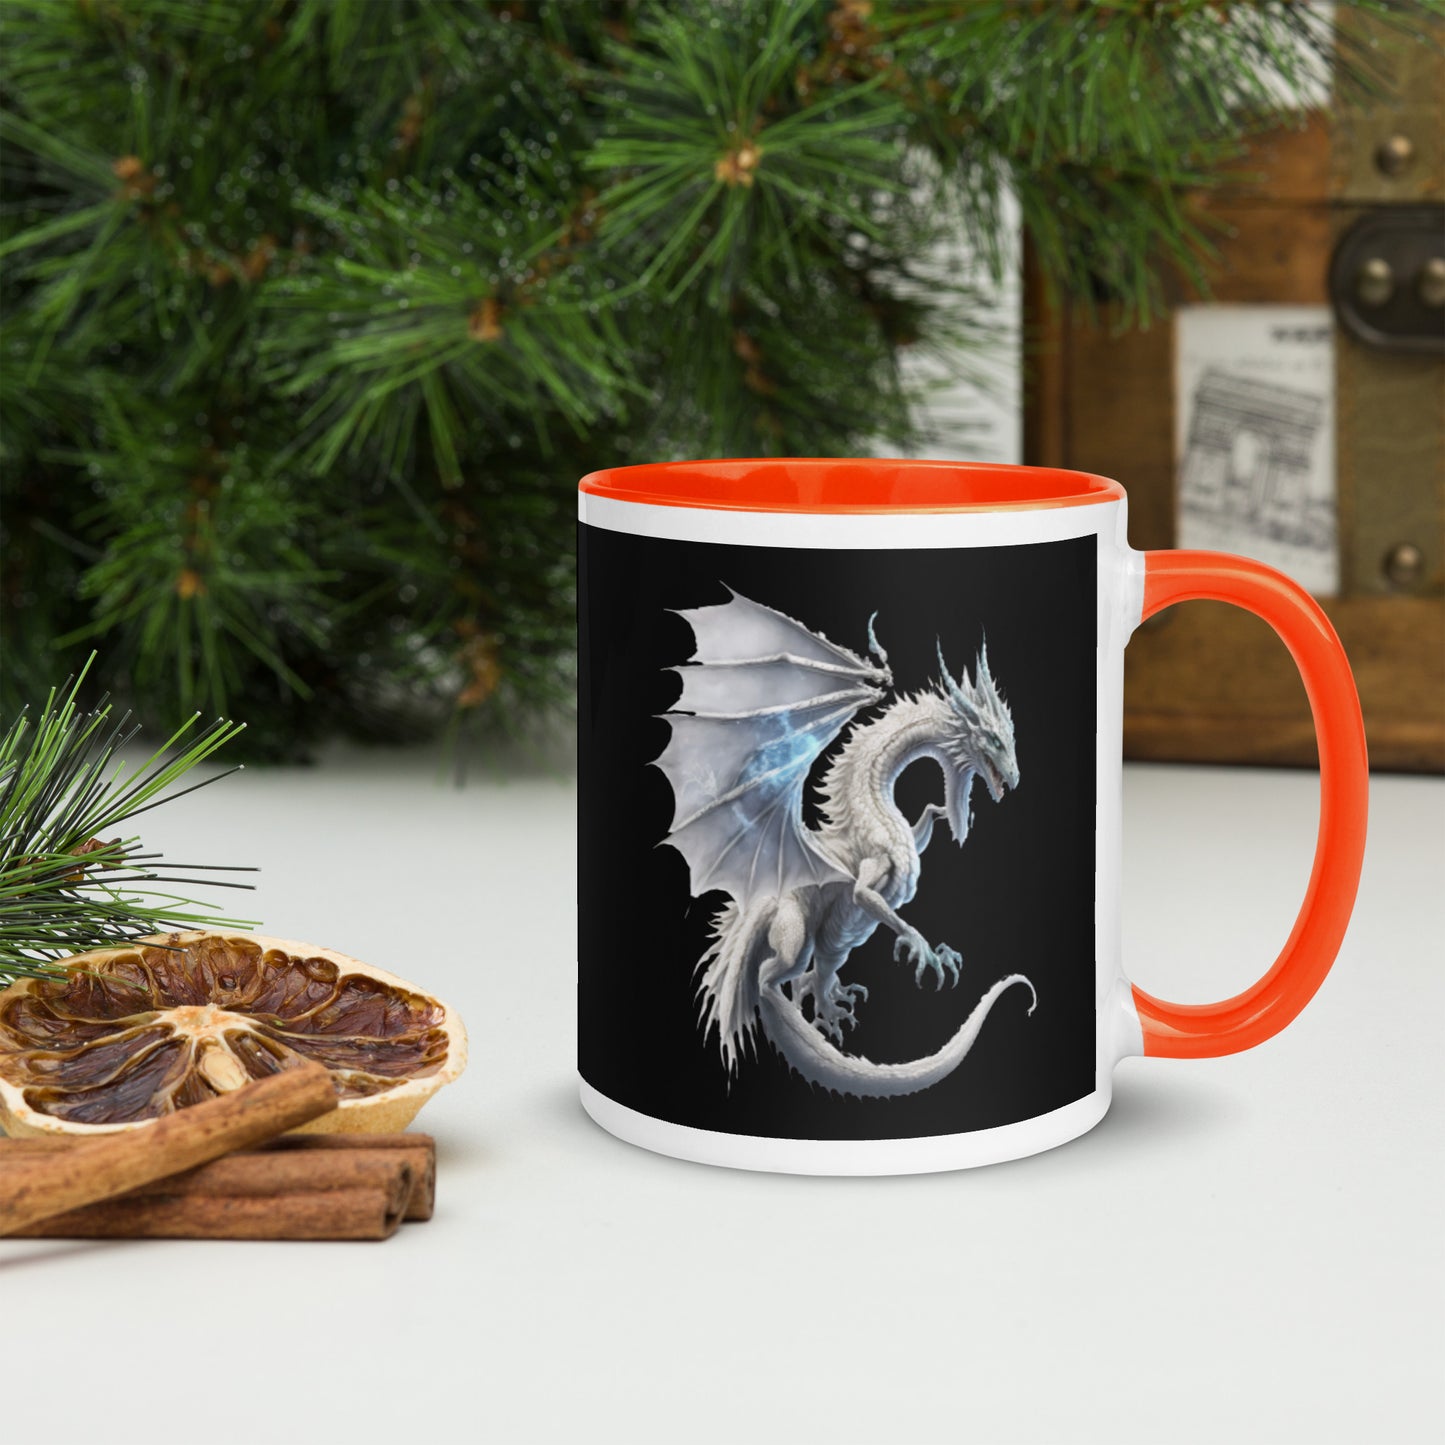 Cool Fantasy Medieval Dragon Designs Sublimation Travel Ceramic Coffee Mug with Color Inside